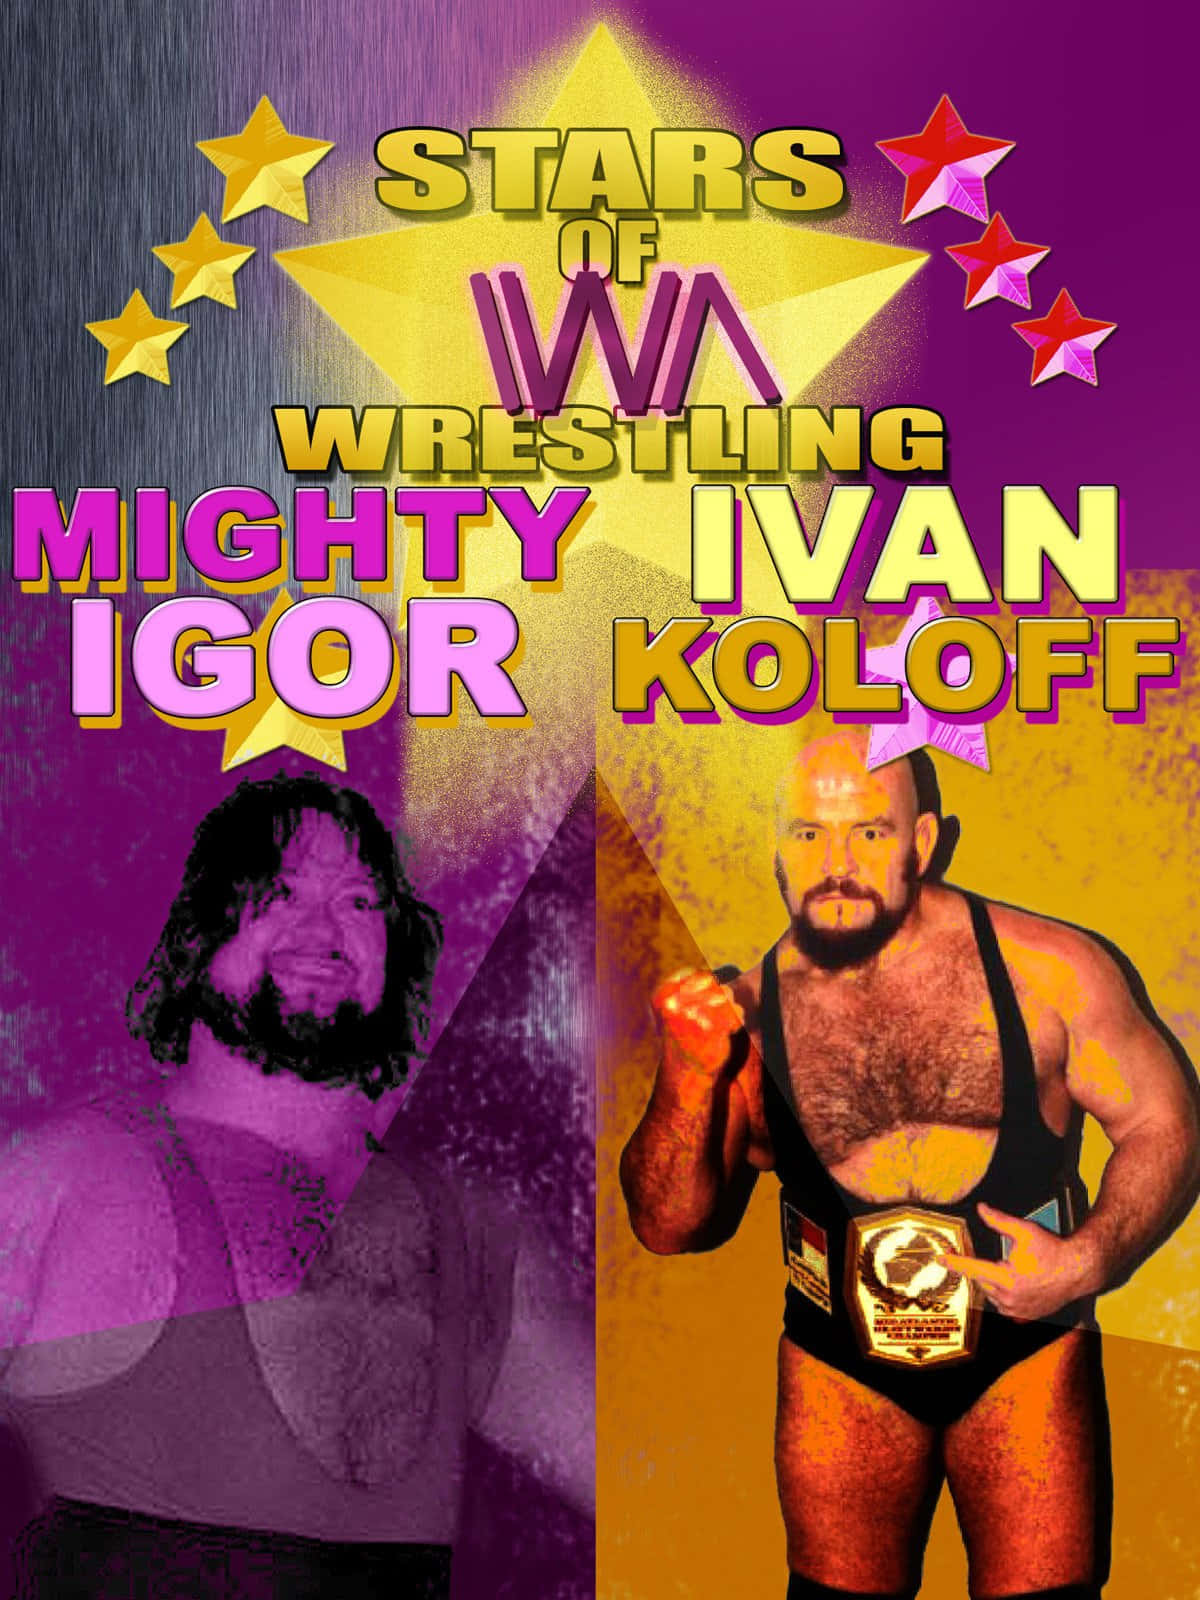 Canadian Wrestler Ivan Koloff And Mighty Igor Graphic Art Wallpaper